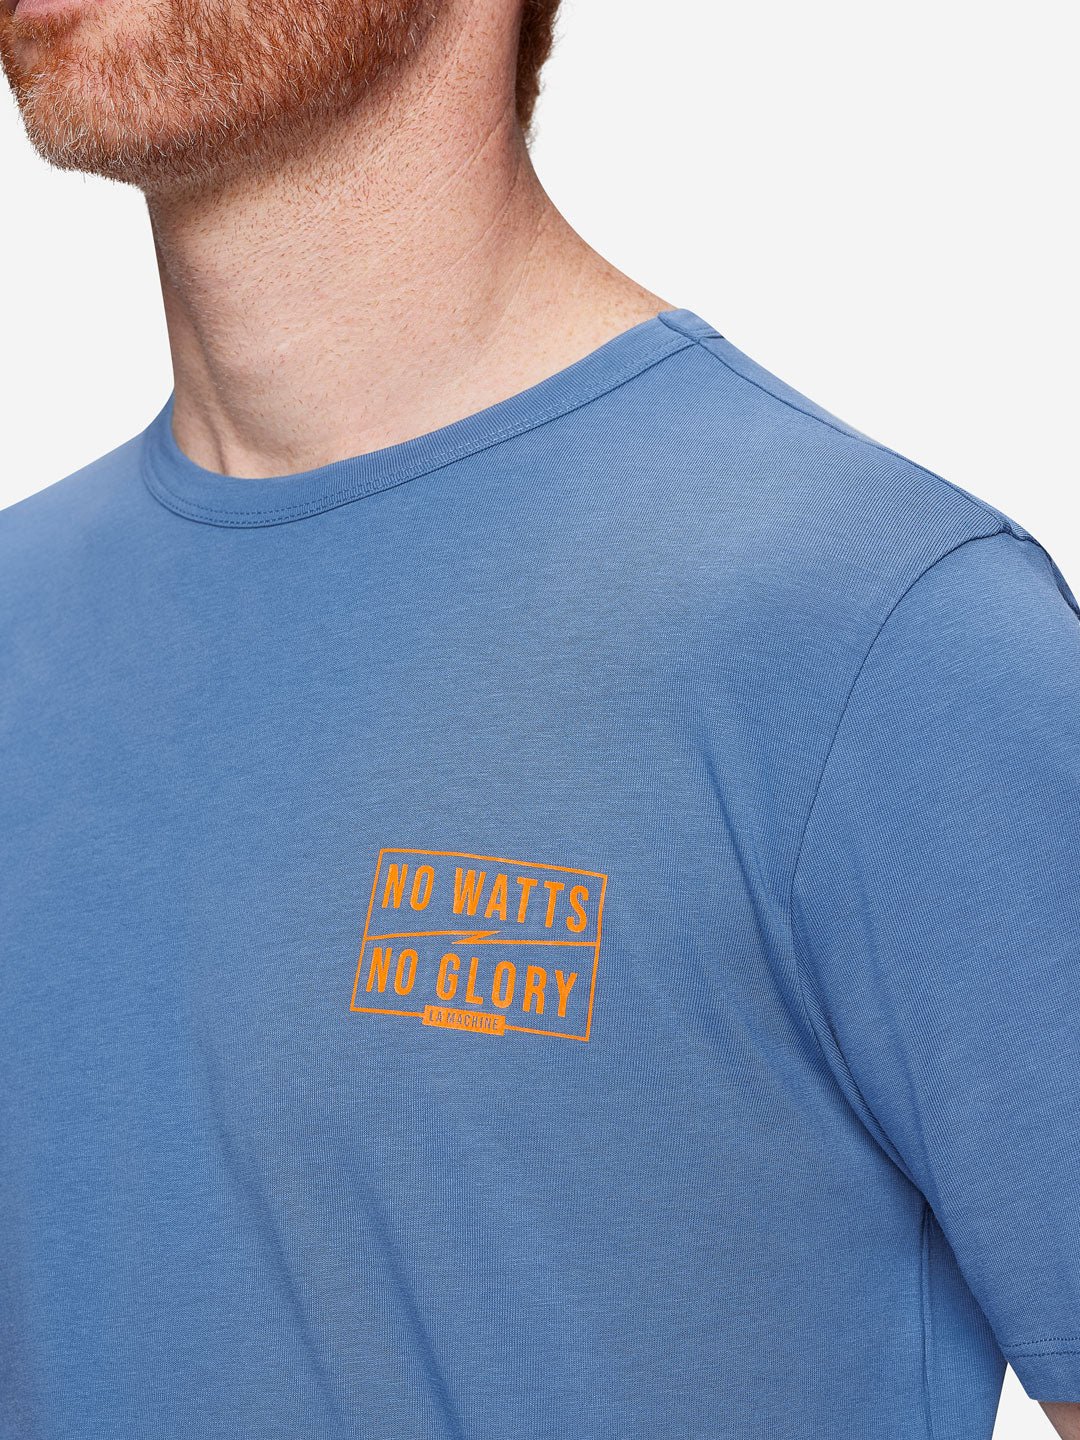 No Watts No Glory - T-shirt - La Machine Cycle Club